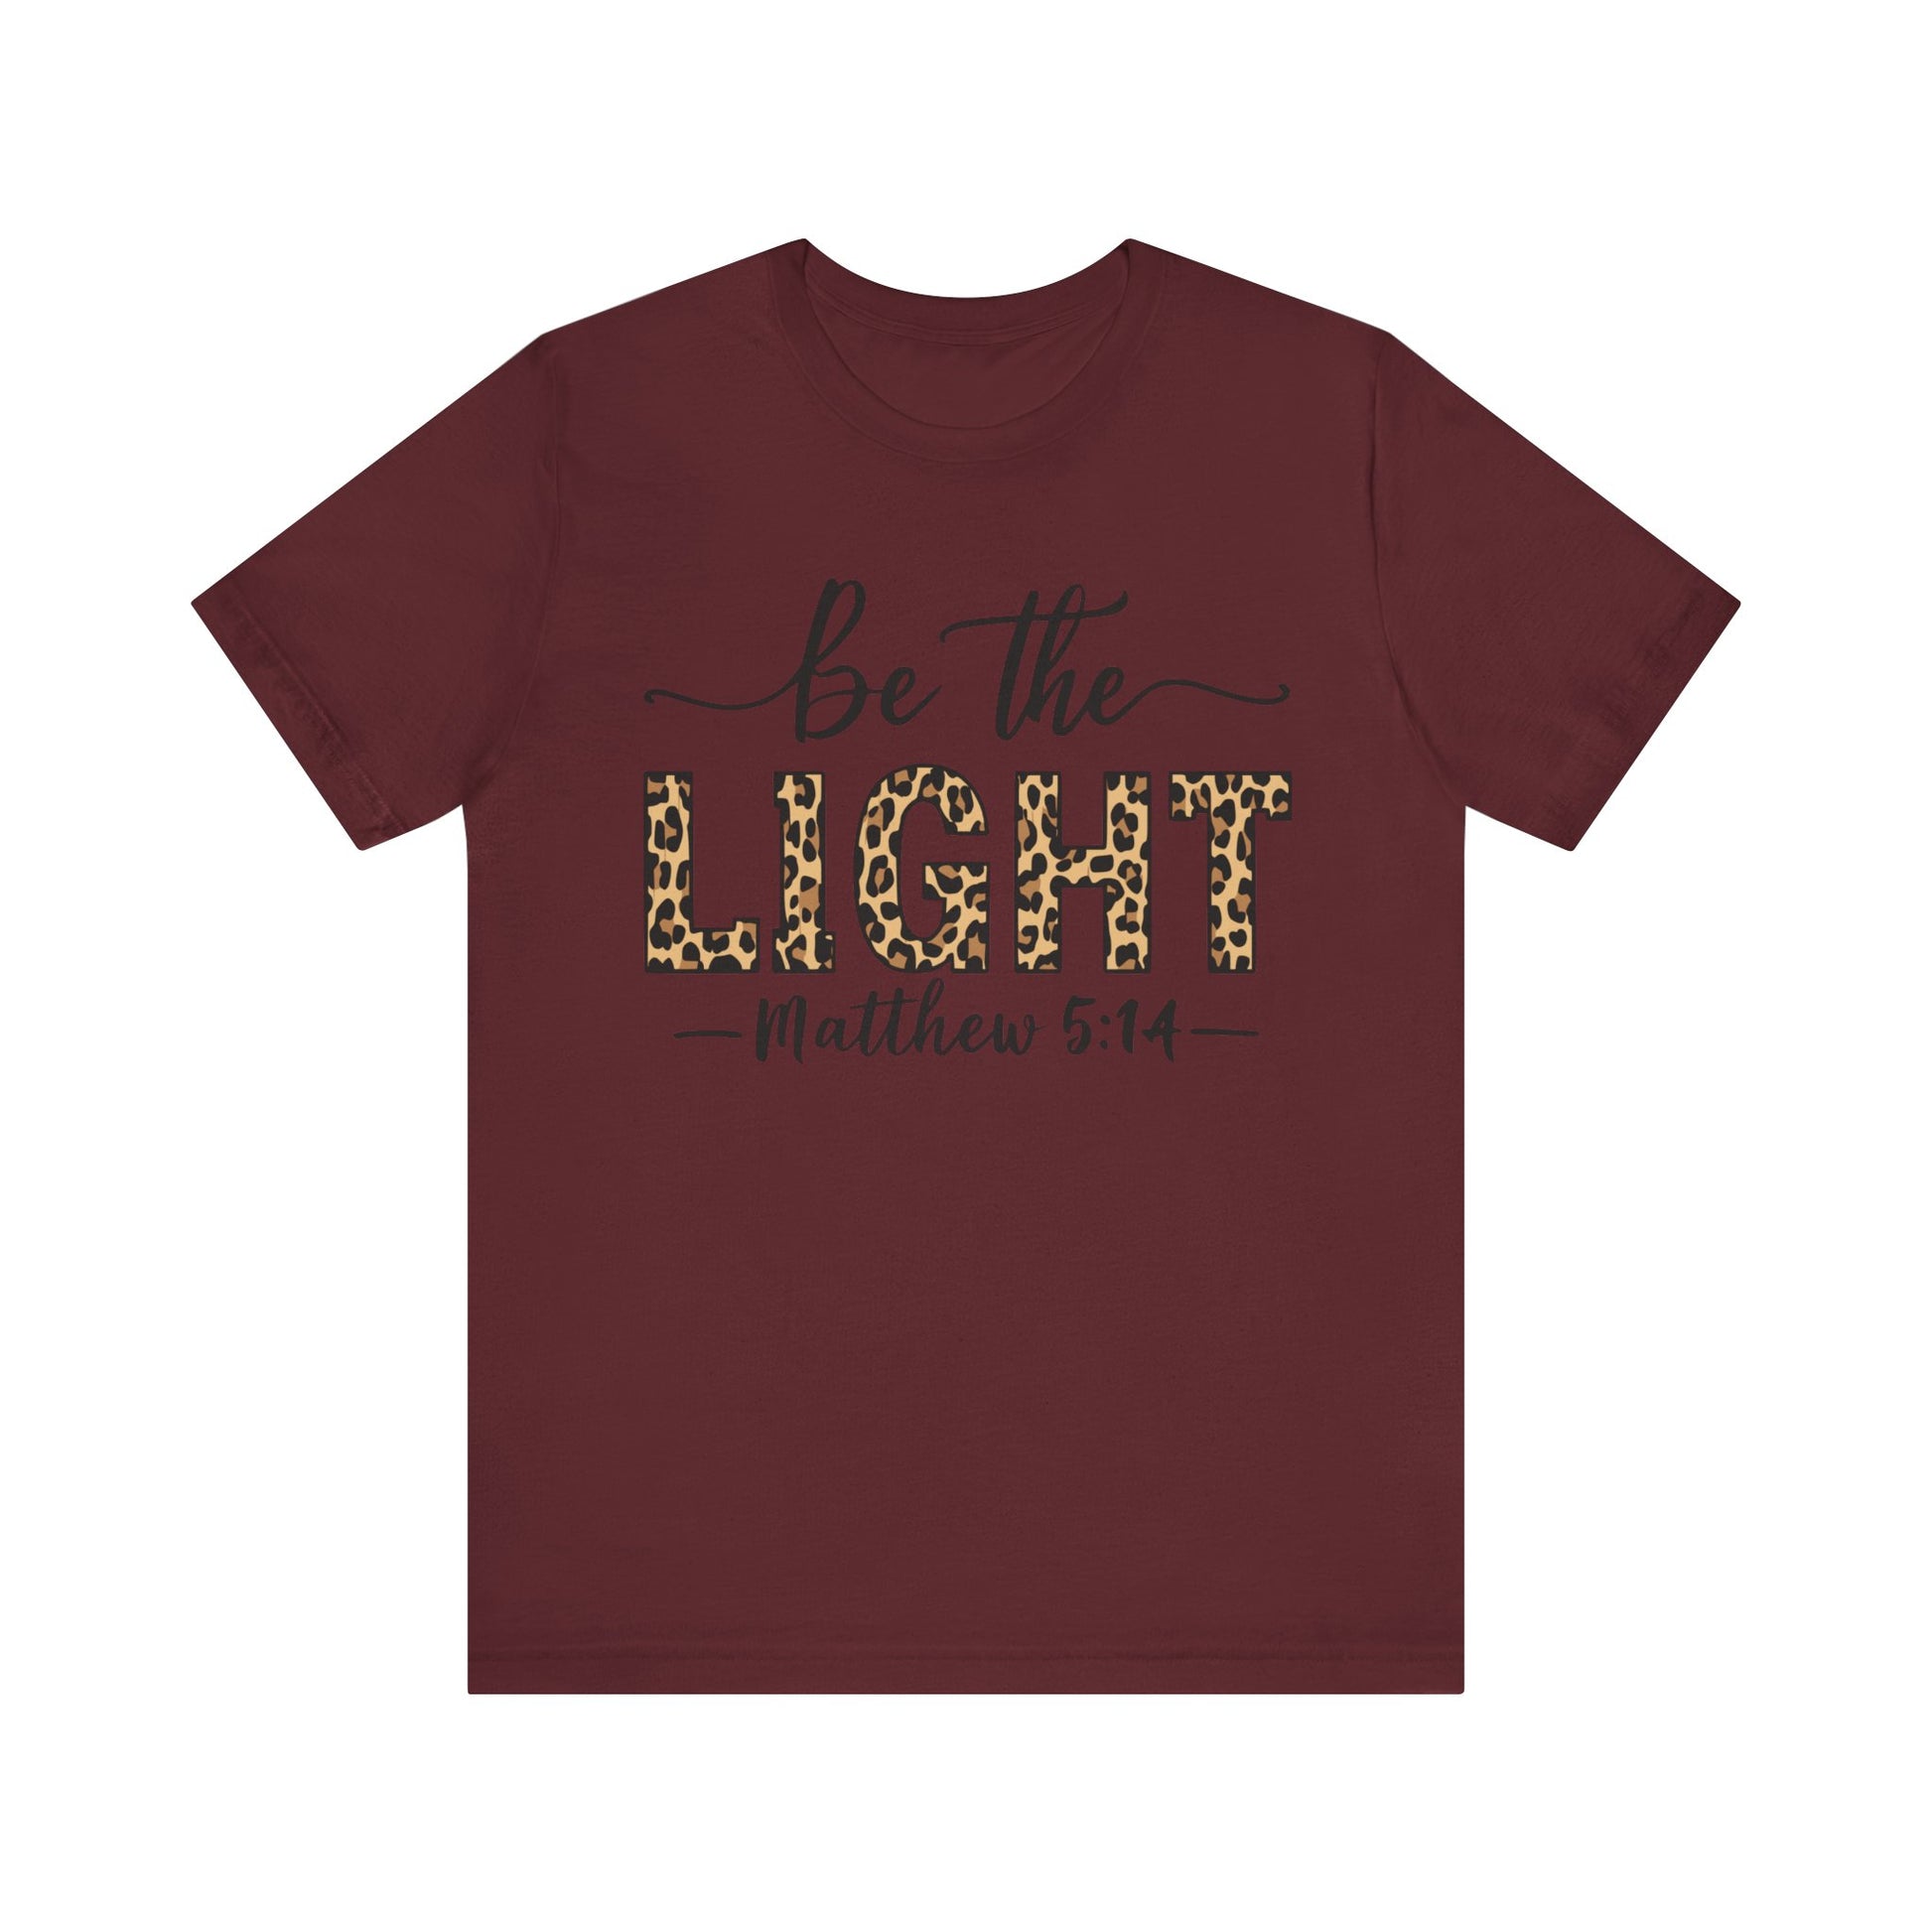 "Be The Light Christian T-Shirt with Cheetah Print Matthew 5:14"